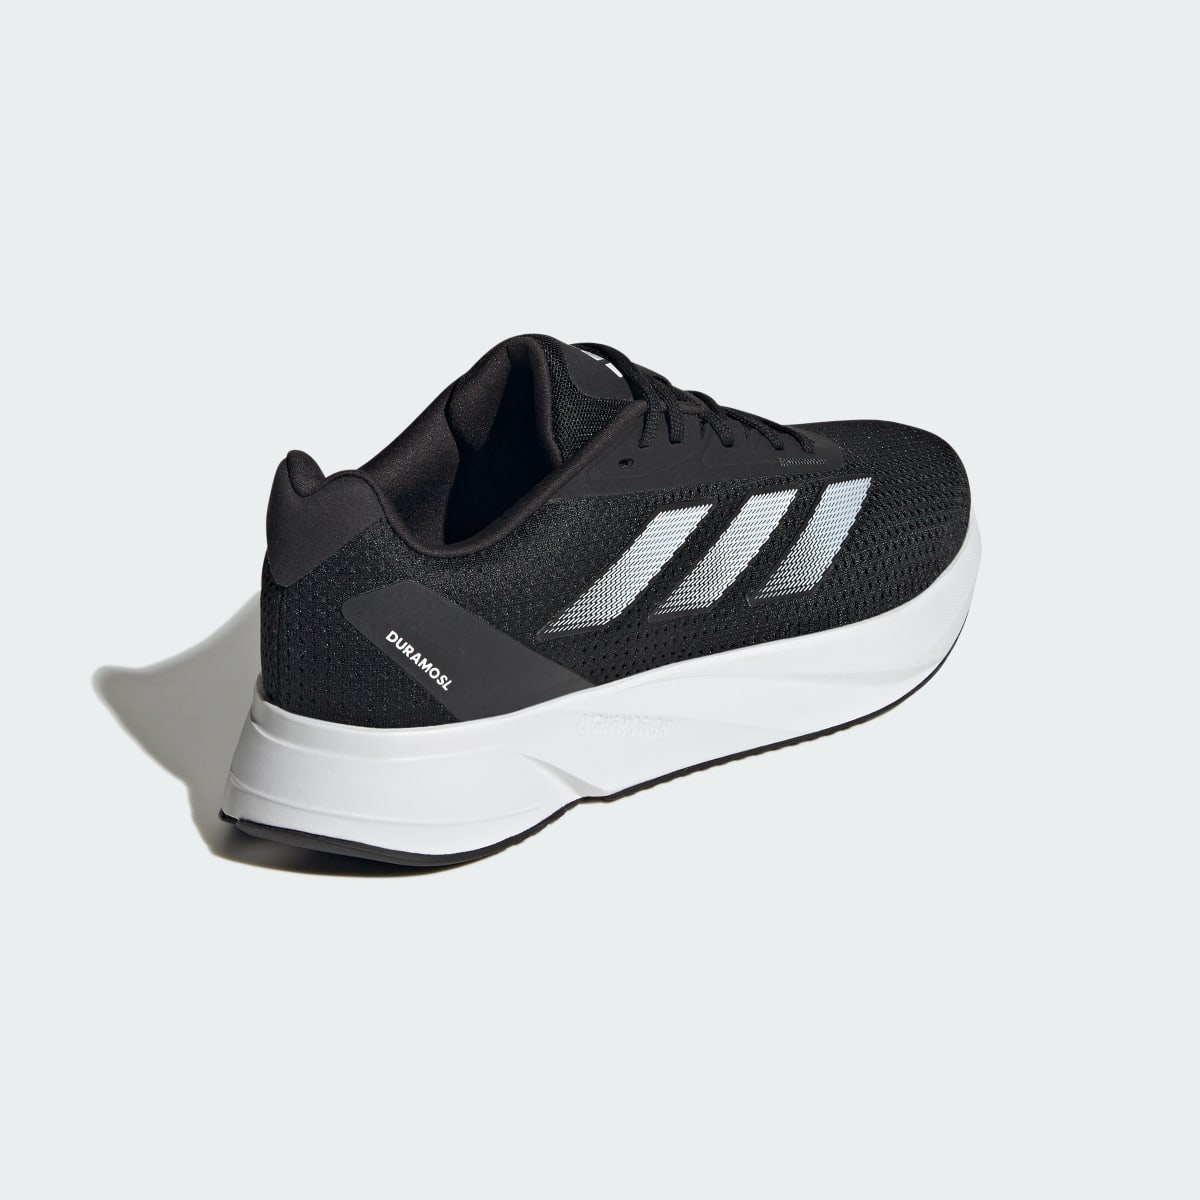 Adidas Duramo SL Wide Running Shoes. 6